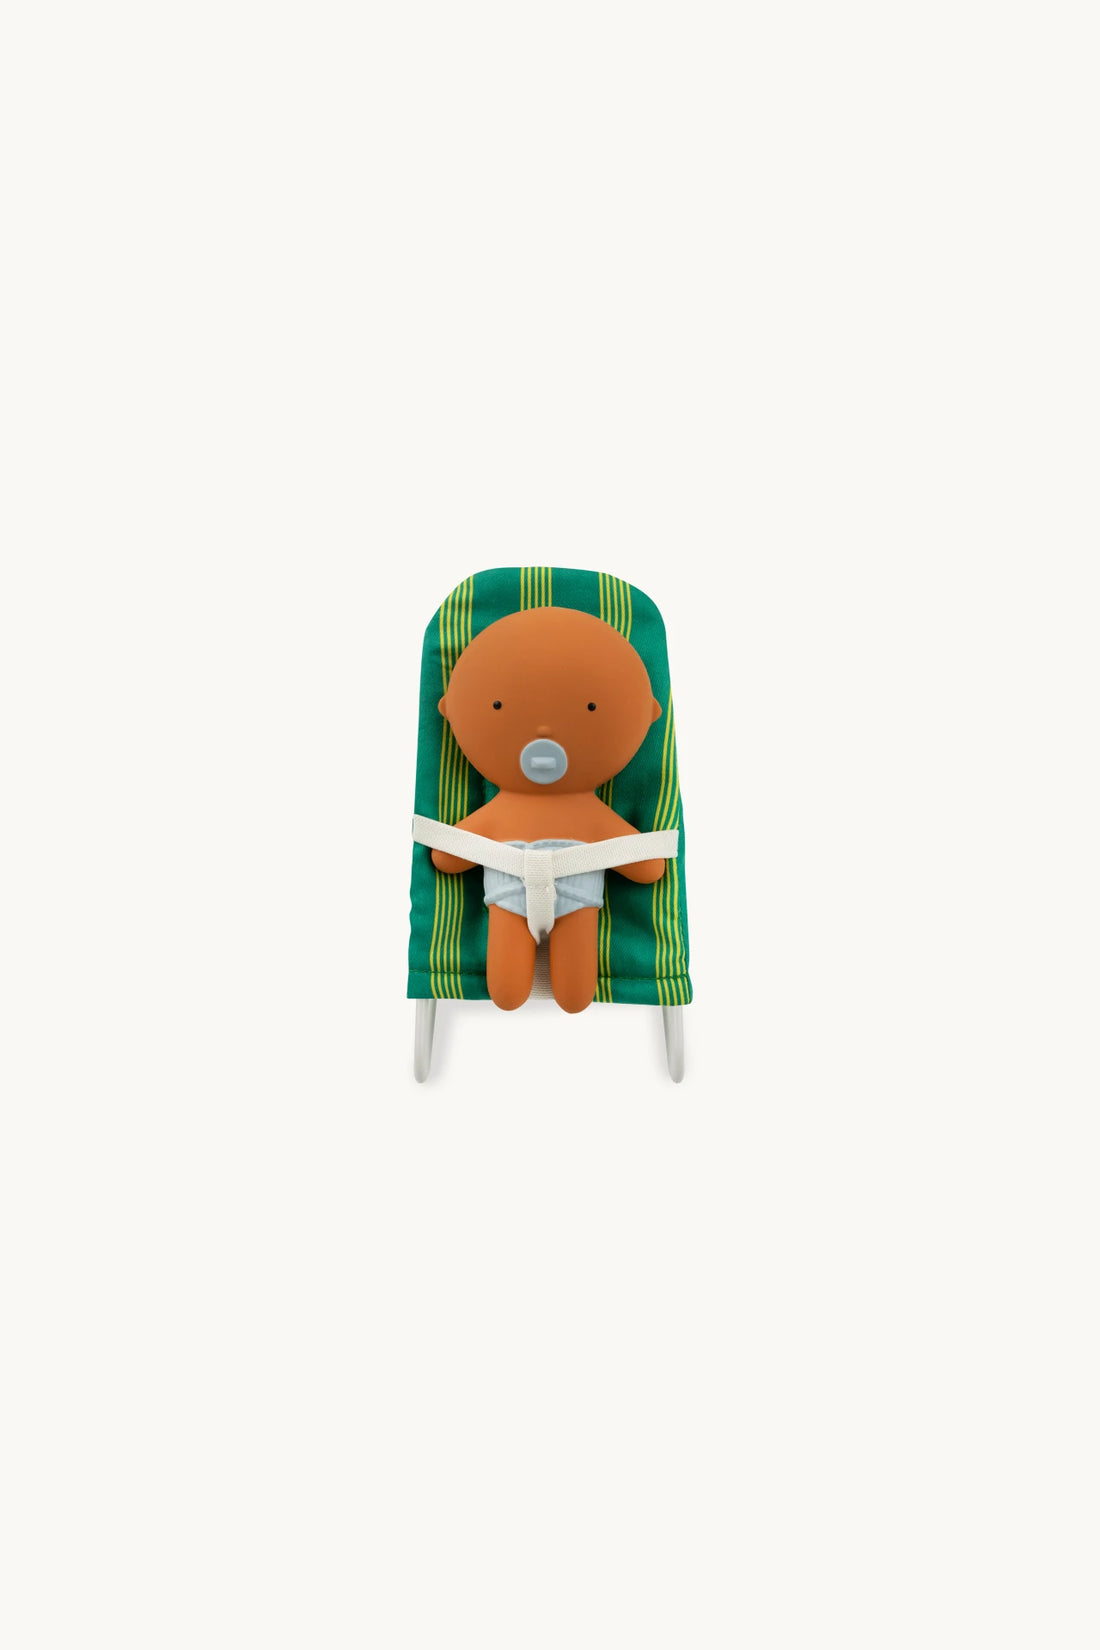 Pocket Bouncy Chair | Green Stripes